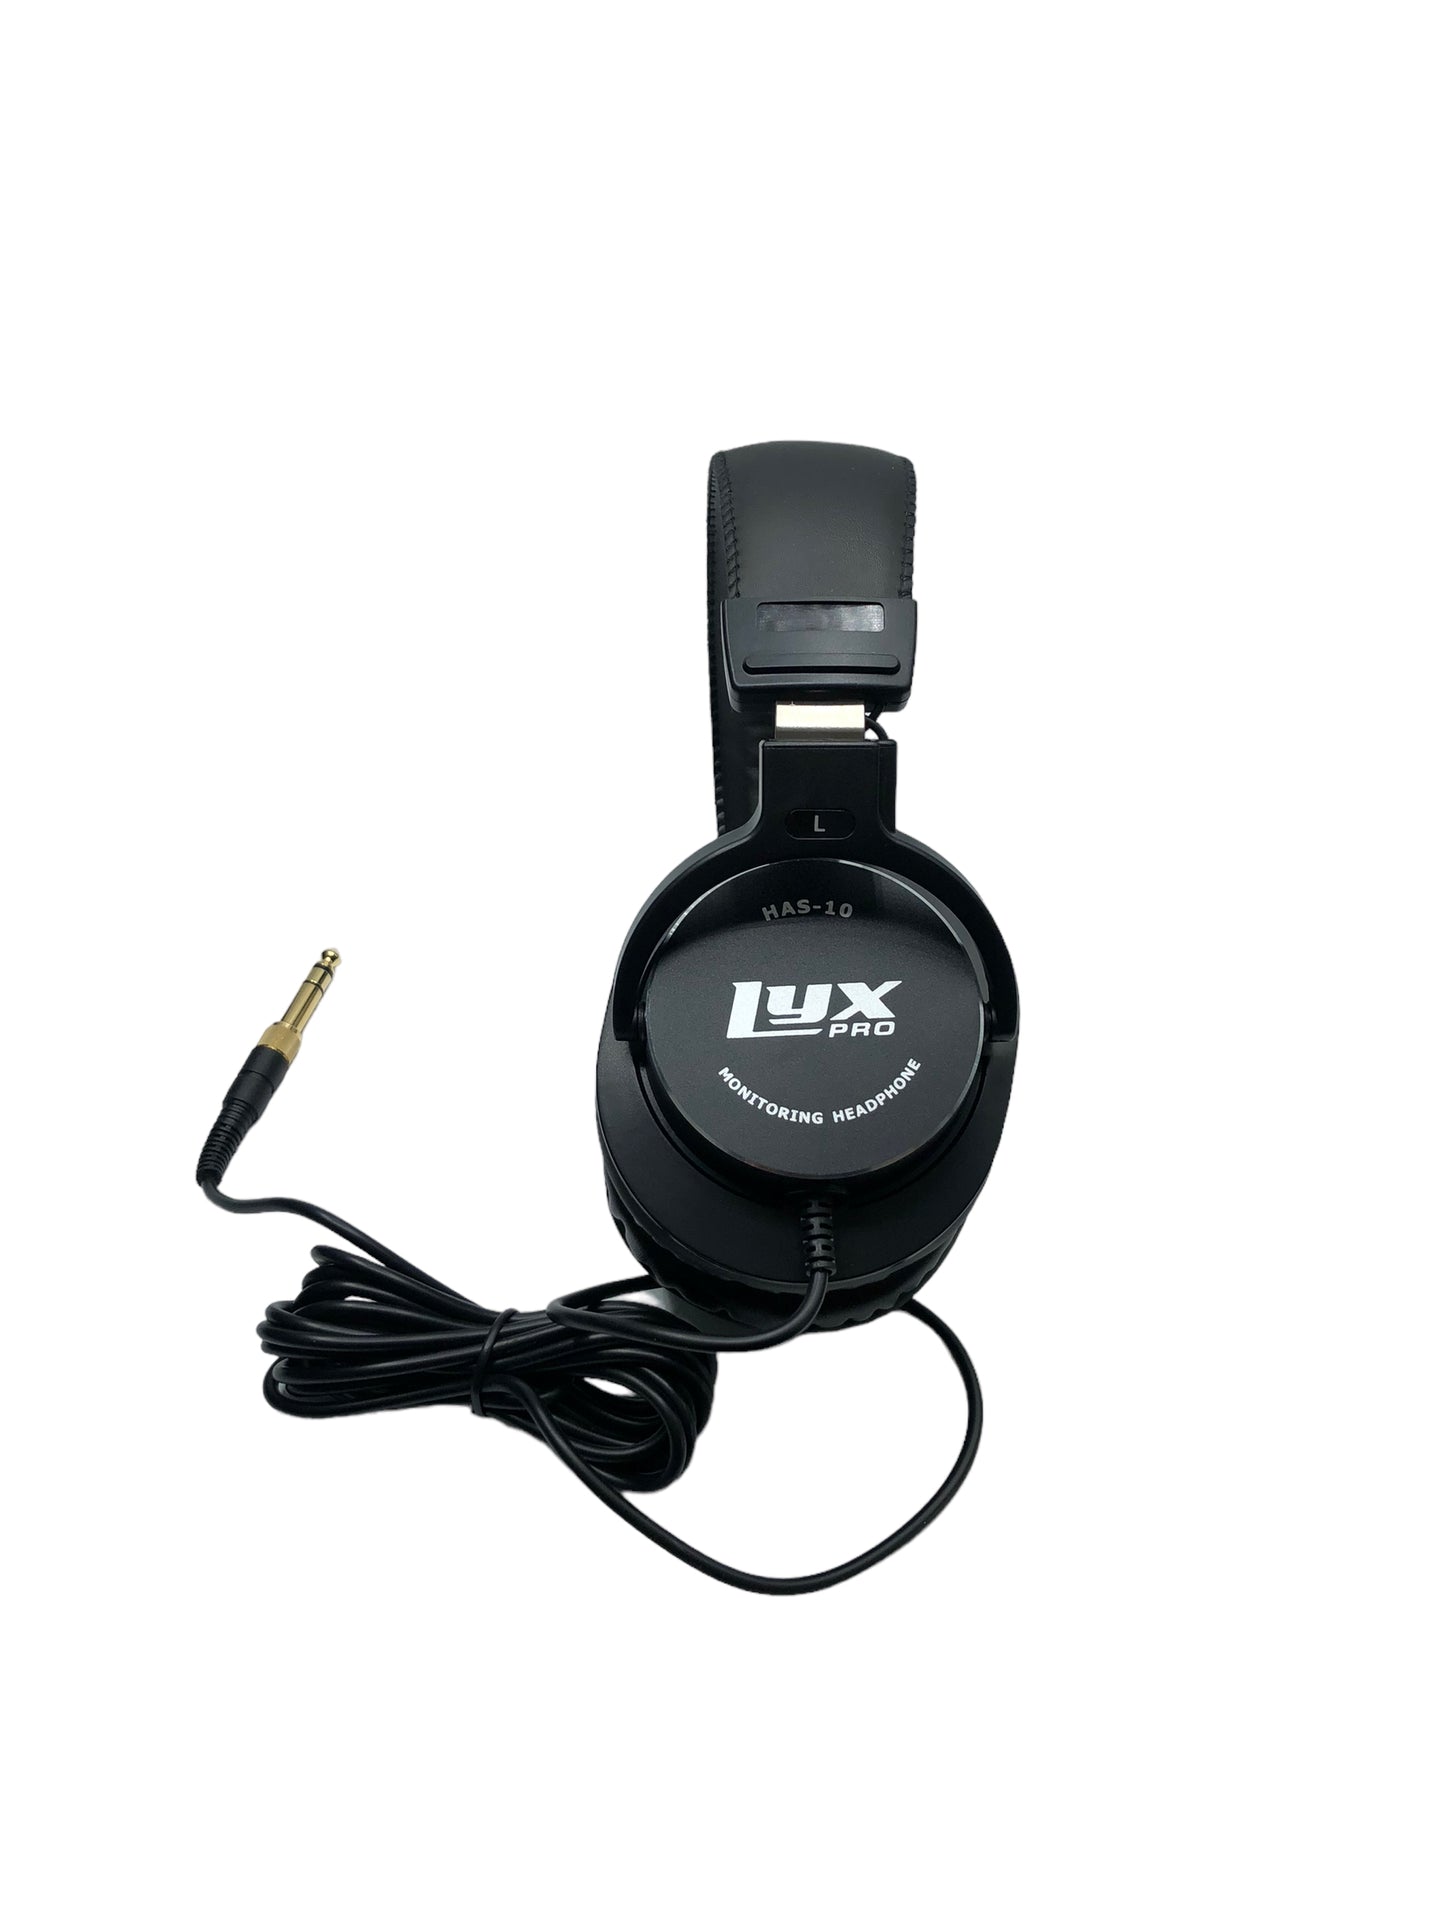 Lyxpro HAS-10 Headphones